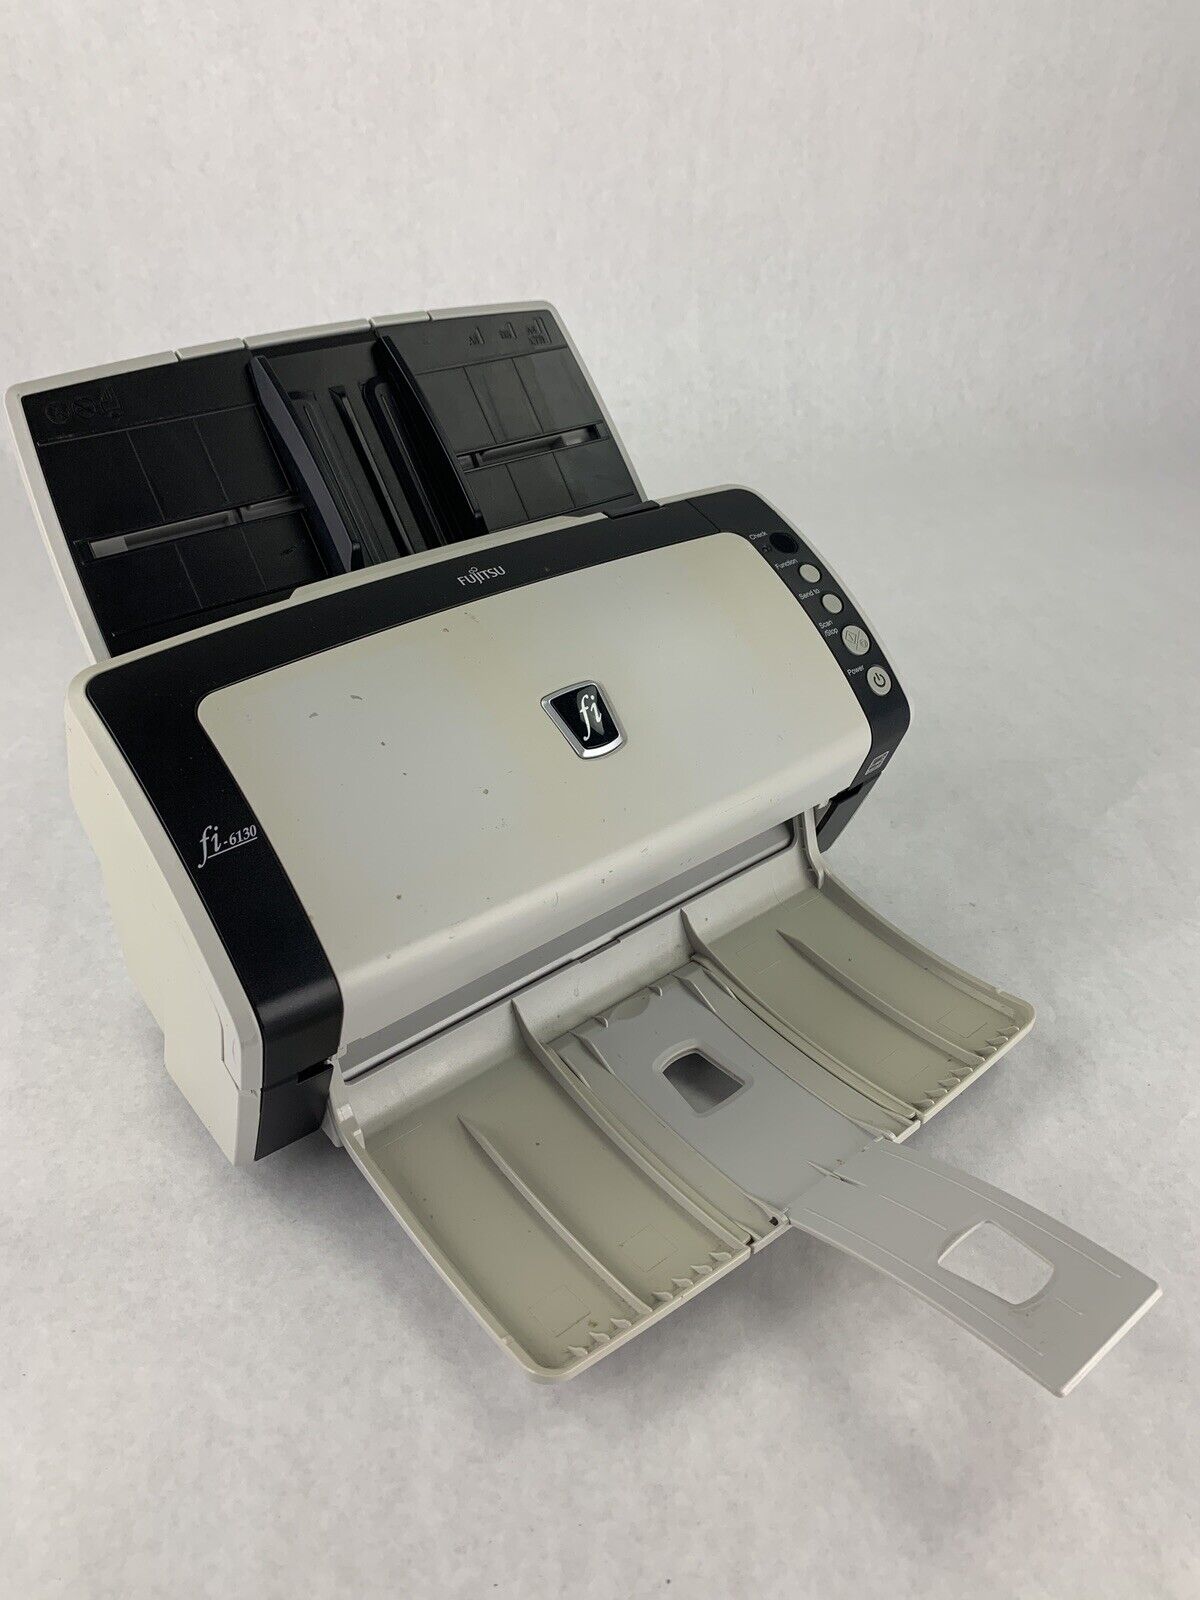 Fujitsu fi-6130 Desktop Printer and Scanner with Back Paper Guide Bad Rollers